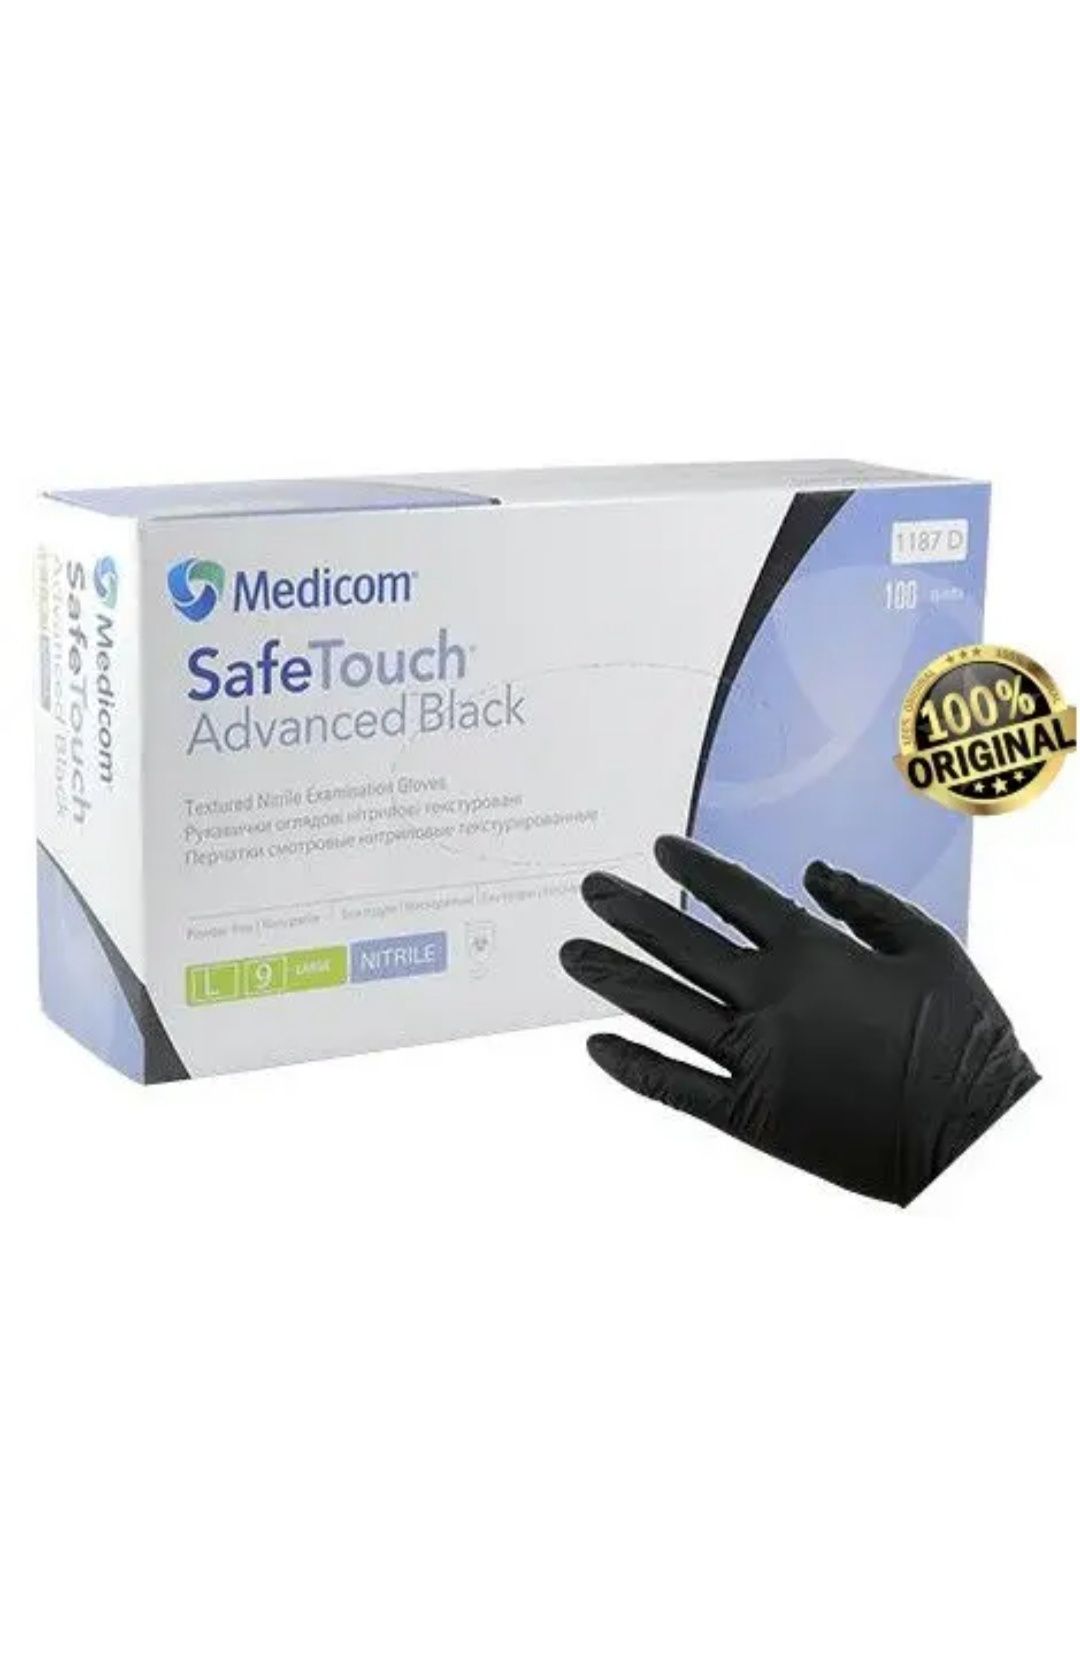 Перчатки нитриловые SafeTouch Advanced Black размер 10 XL

Size XL